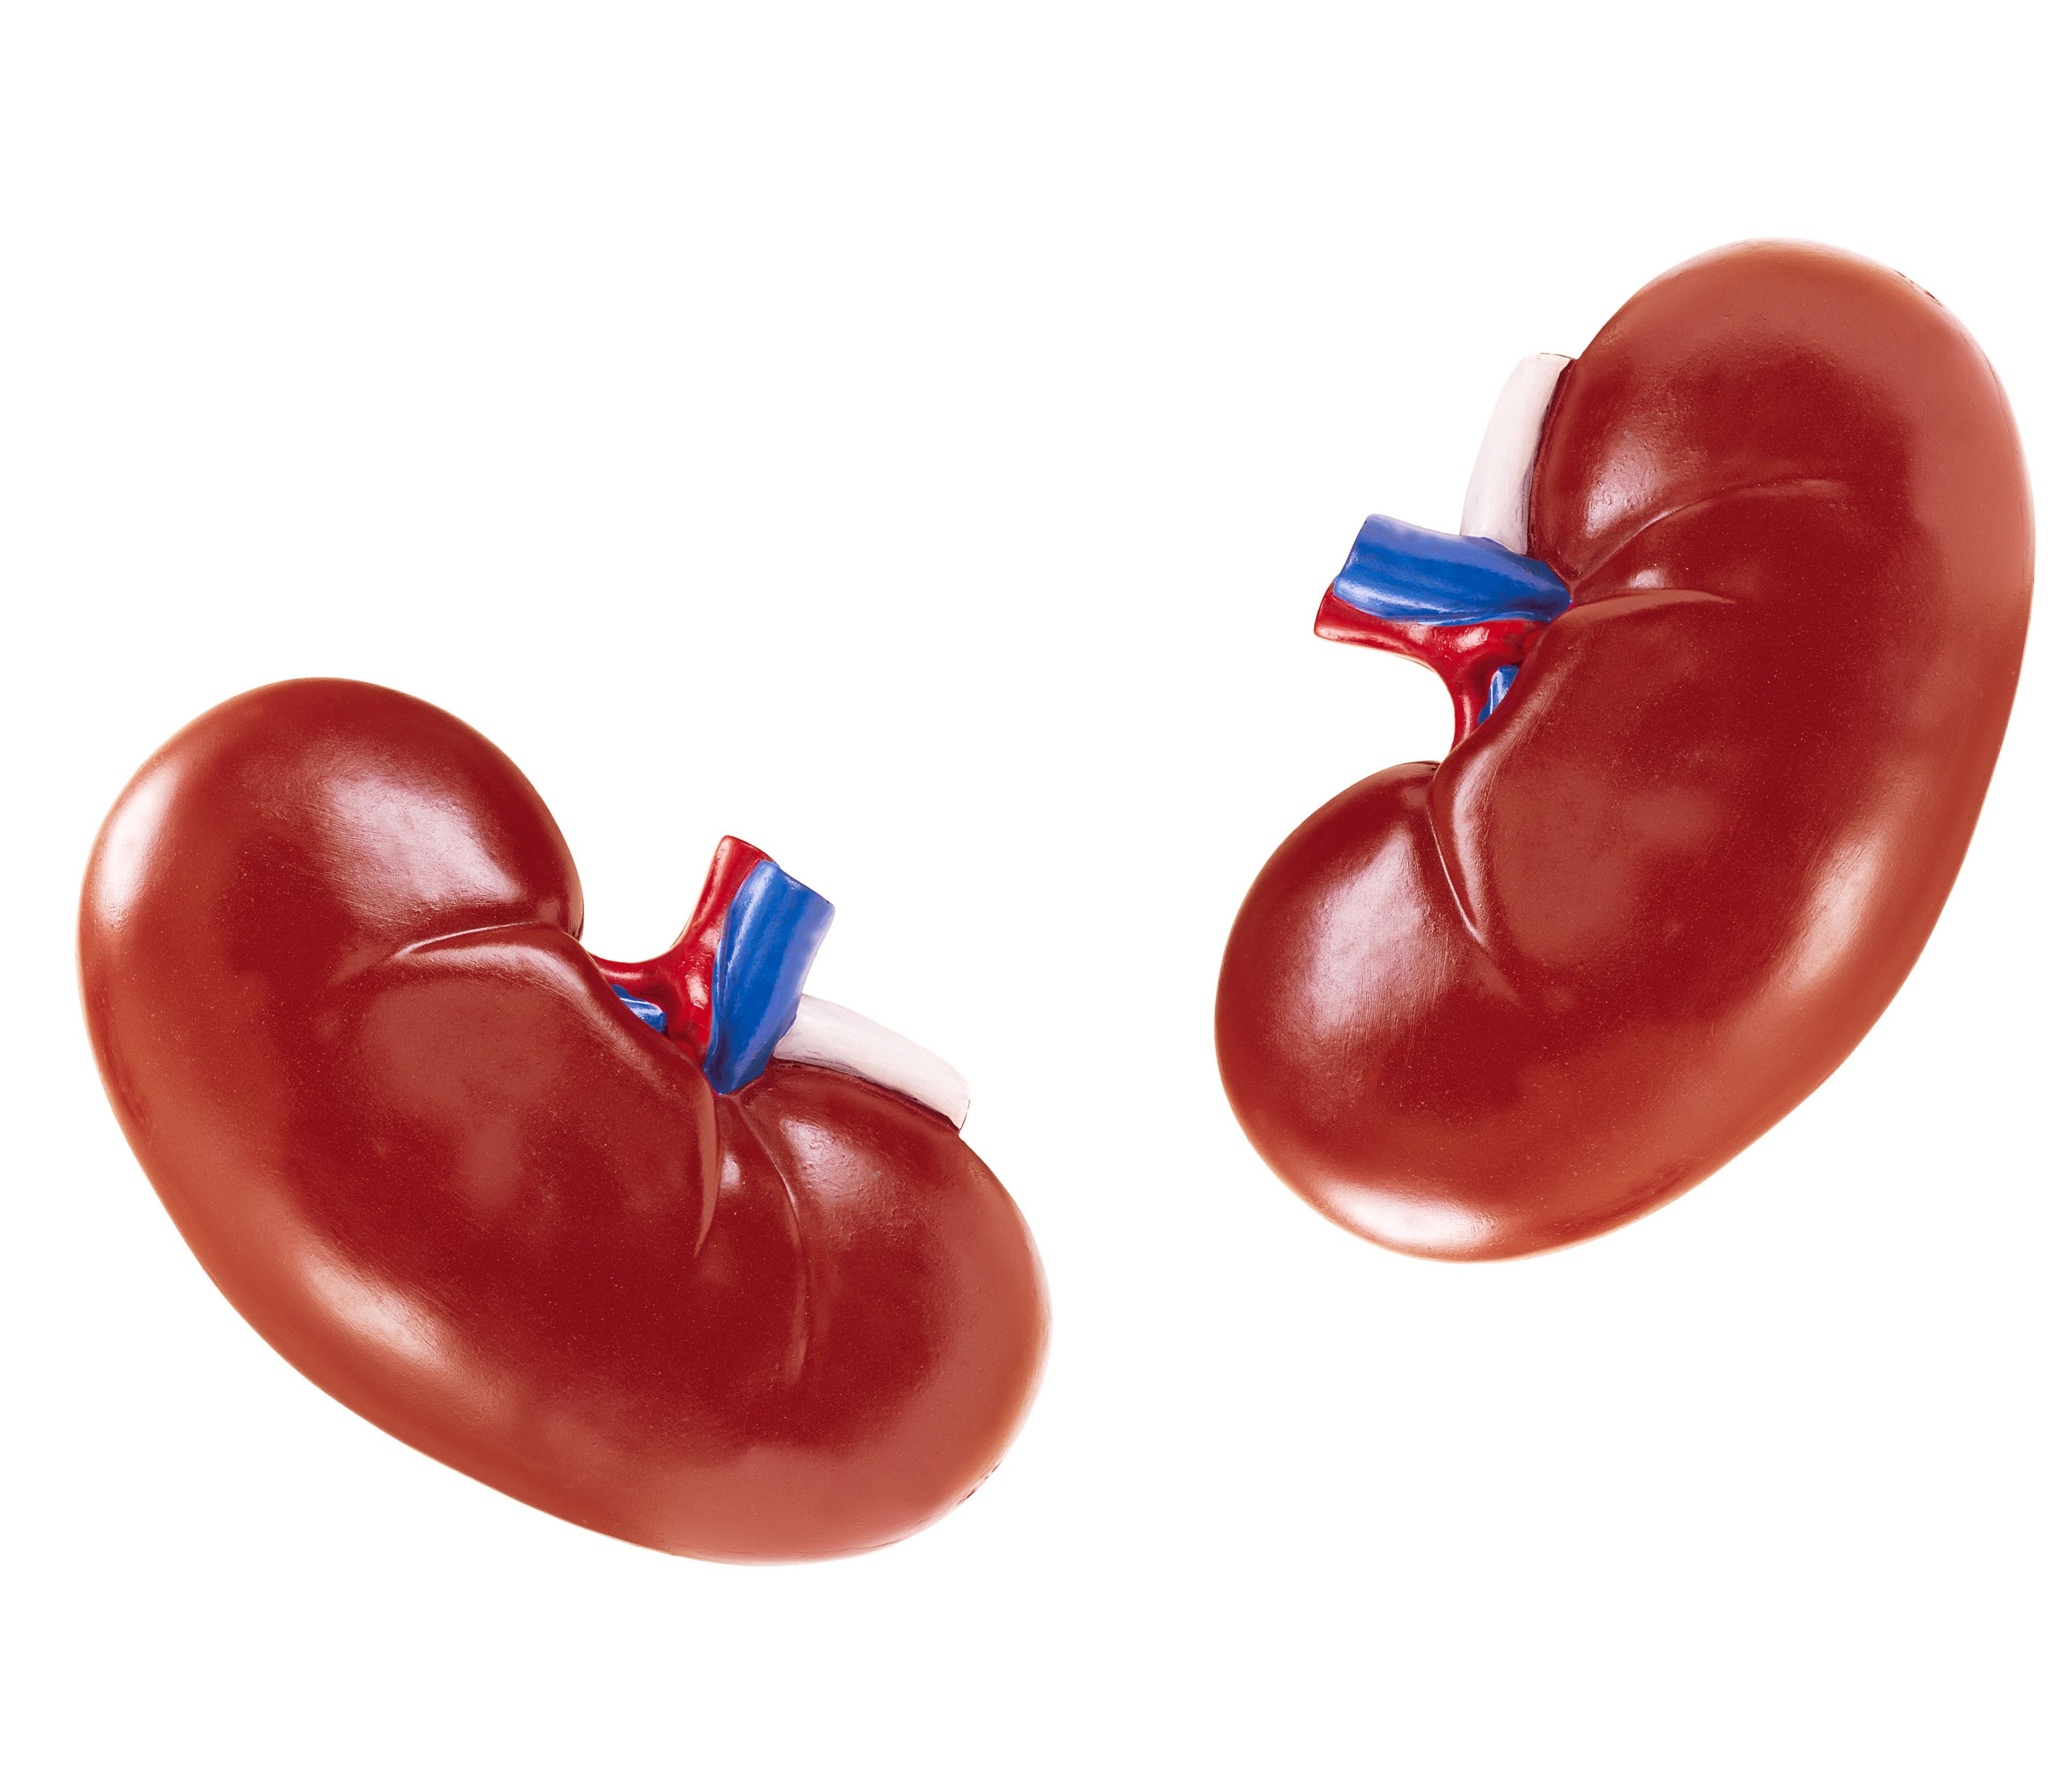 5 Ways To Keep Your Kidneys Healthy